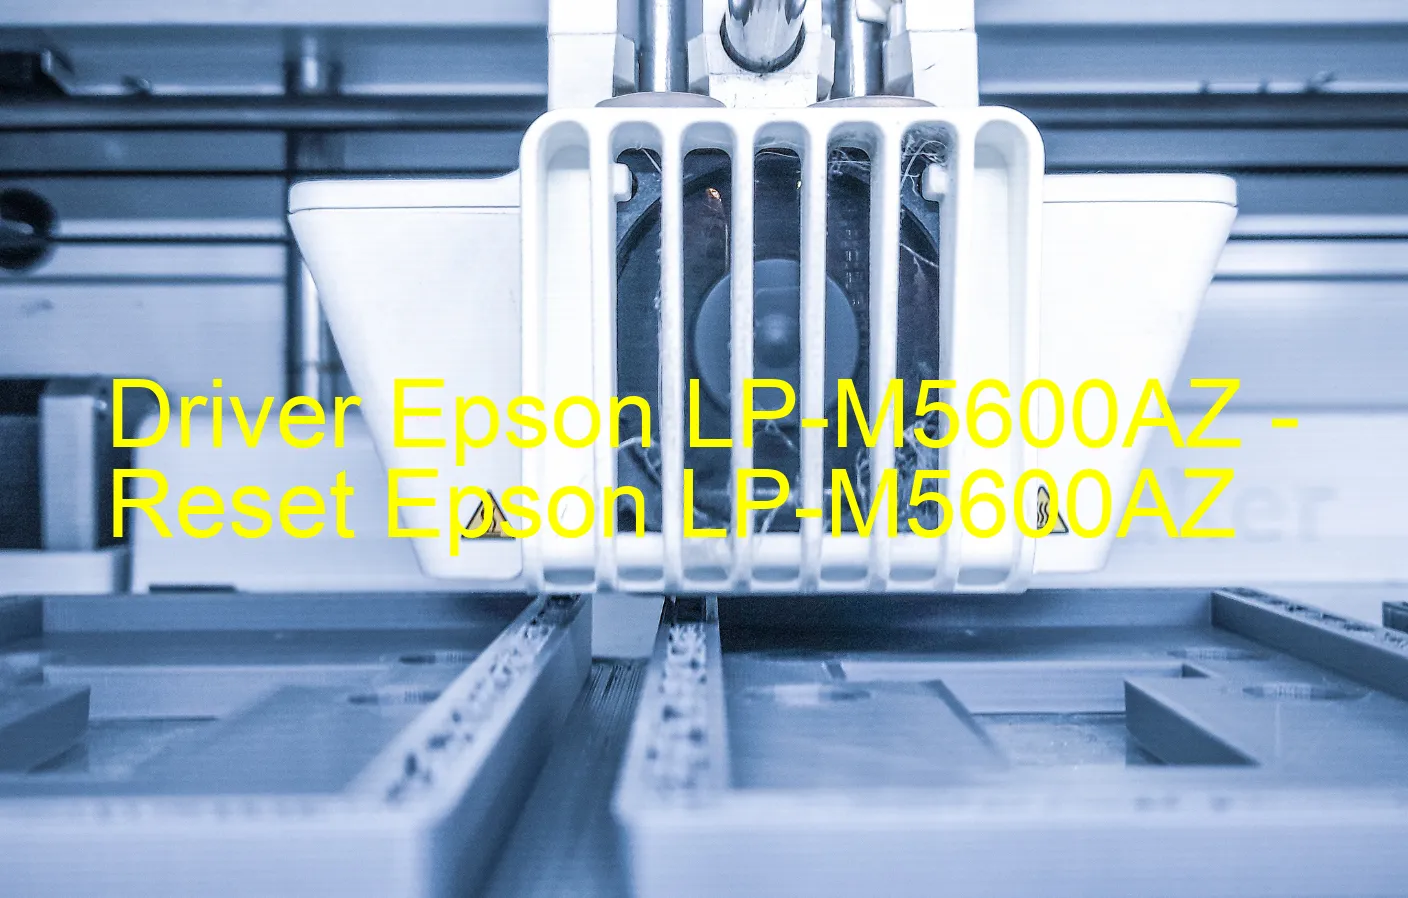 Epson LP-M5600AZのドライバー、Epson LP-M5600AZのリセットソフトウェア